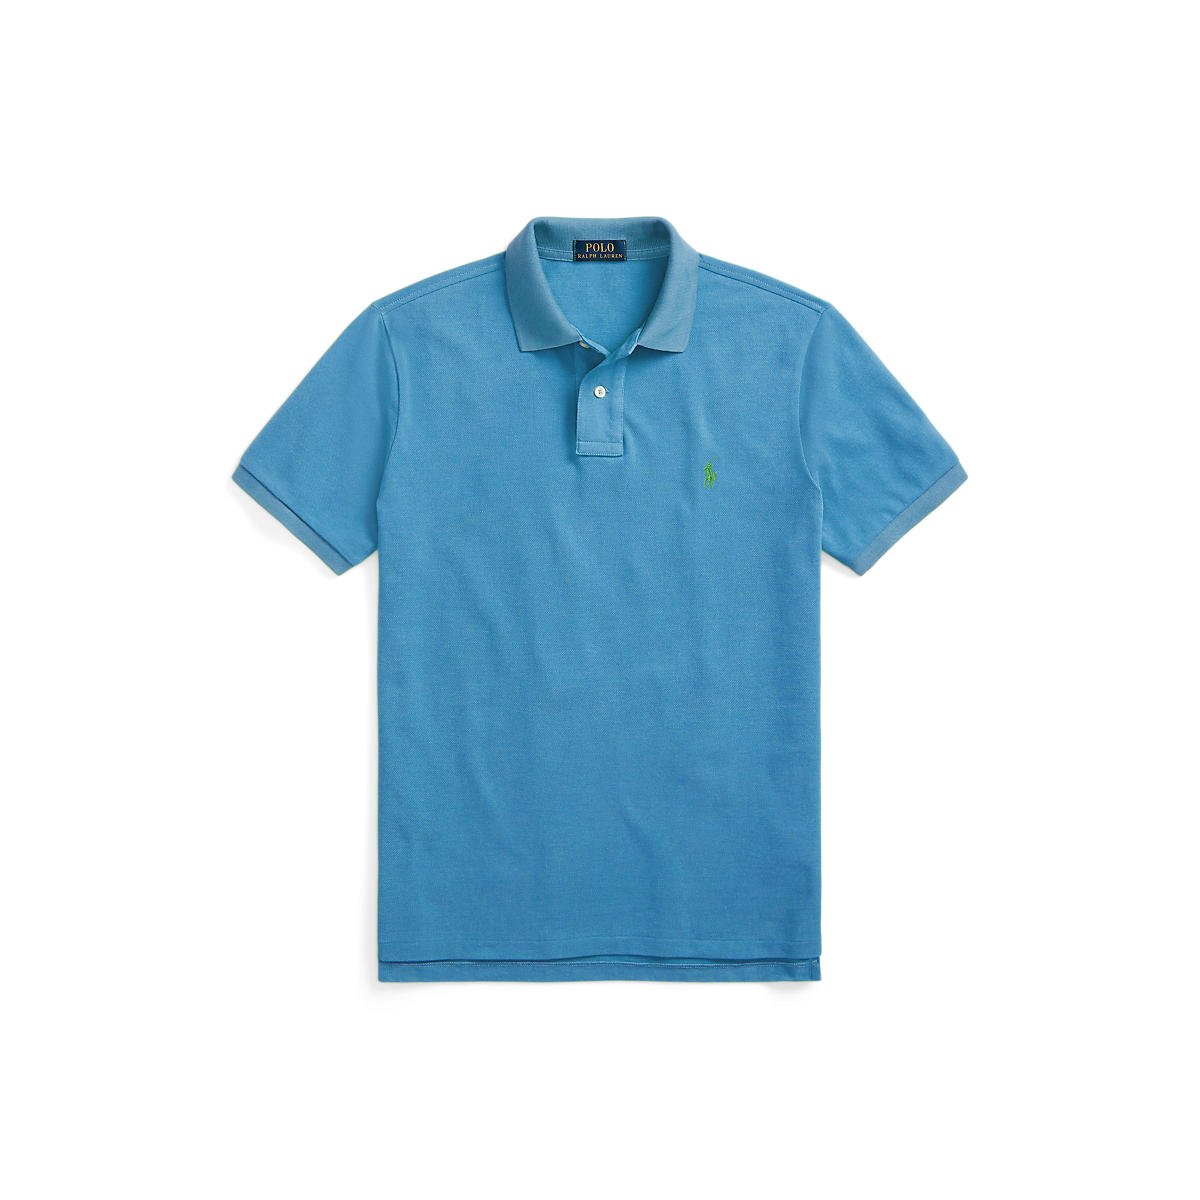 710536856329 Polo Ralph Lauren Slim Fit Mesh Polo Shirt Retreat Blue, P5,355 from P7,650.jpeg